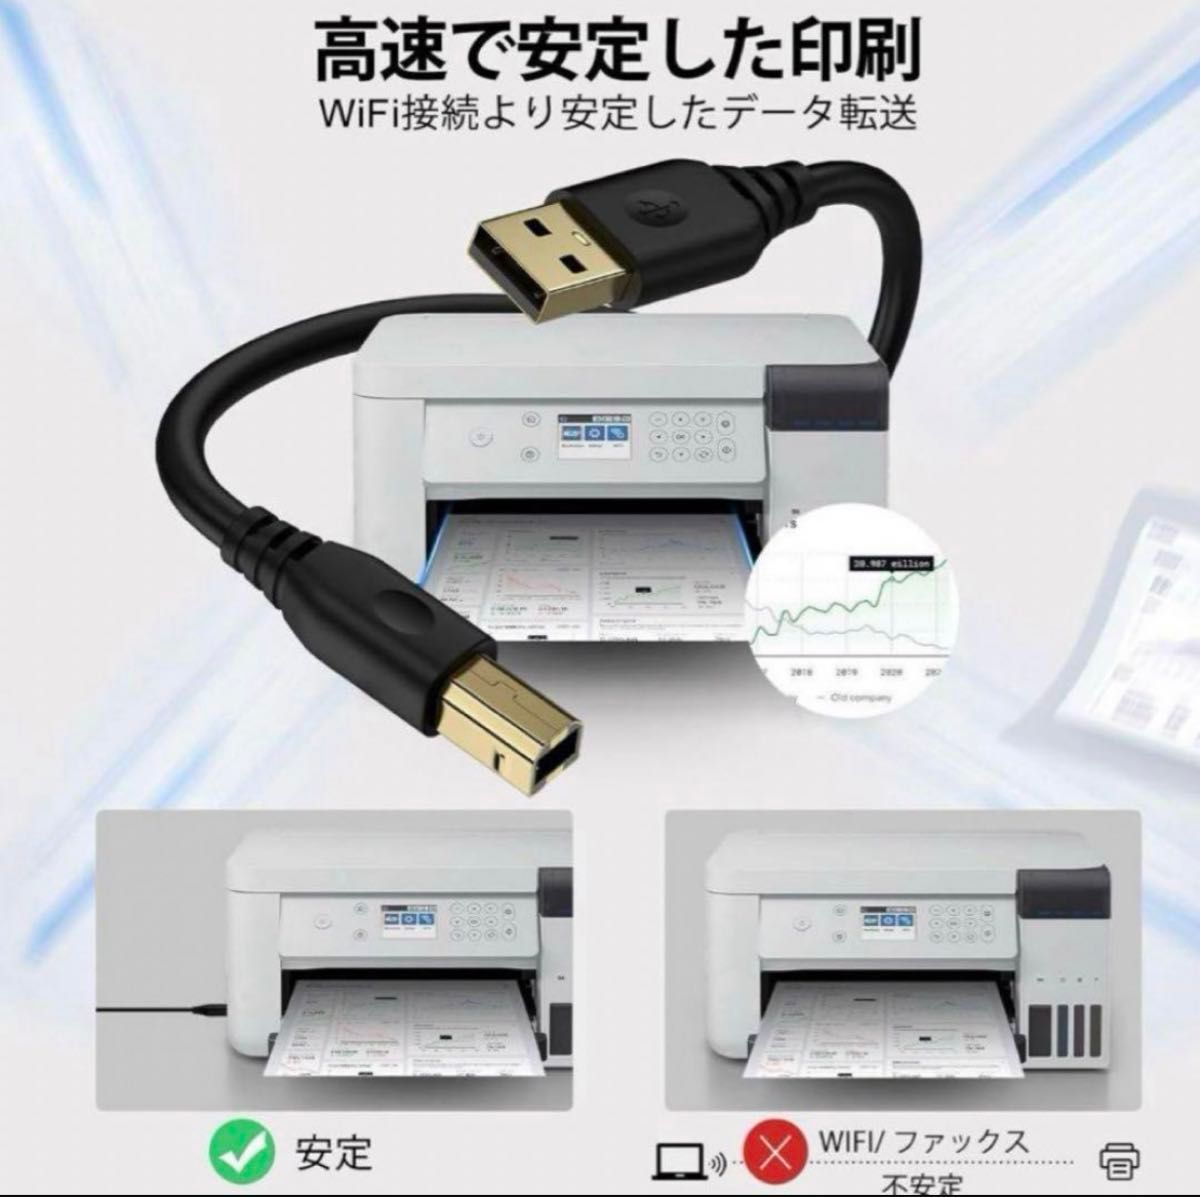  USB 2.0ケーブル 10m プリンターケーブル Aオス-Bオス